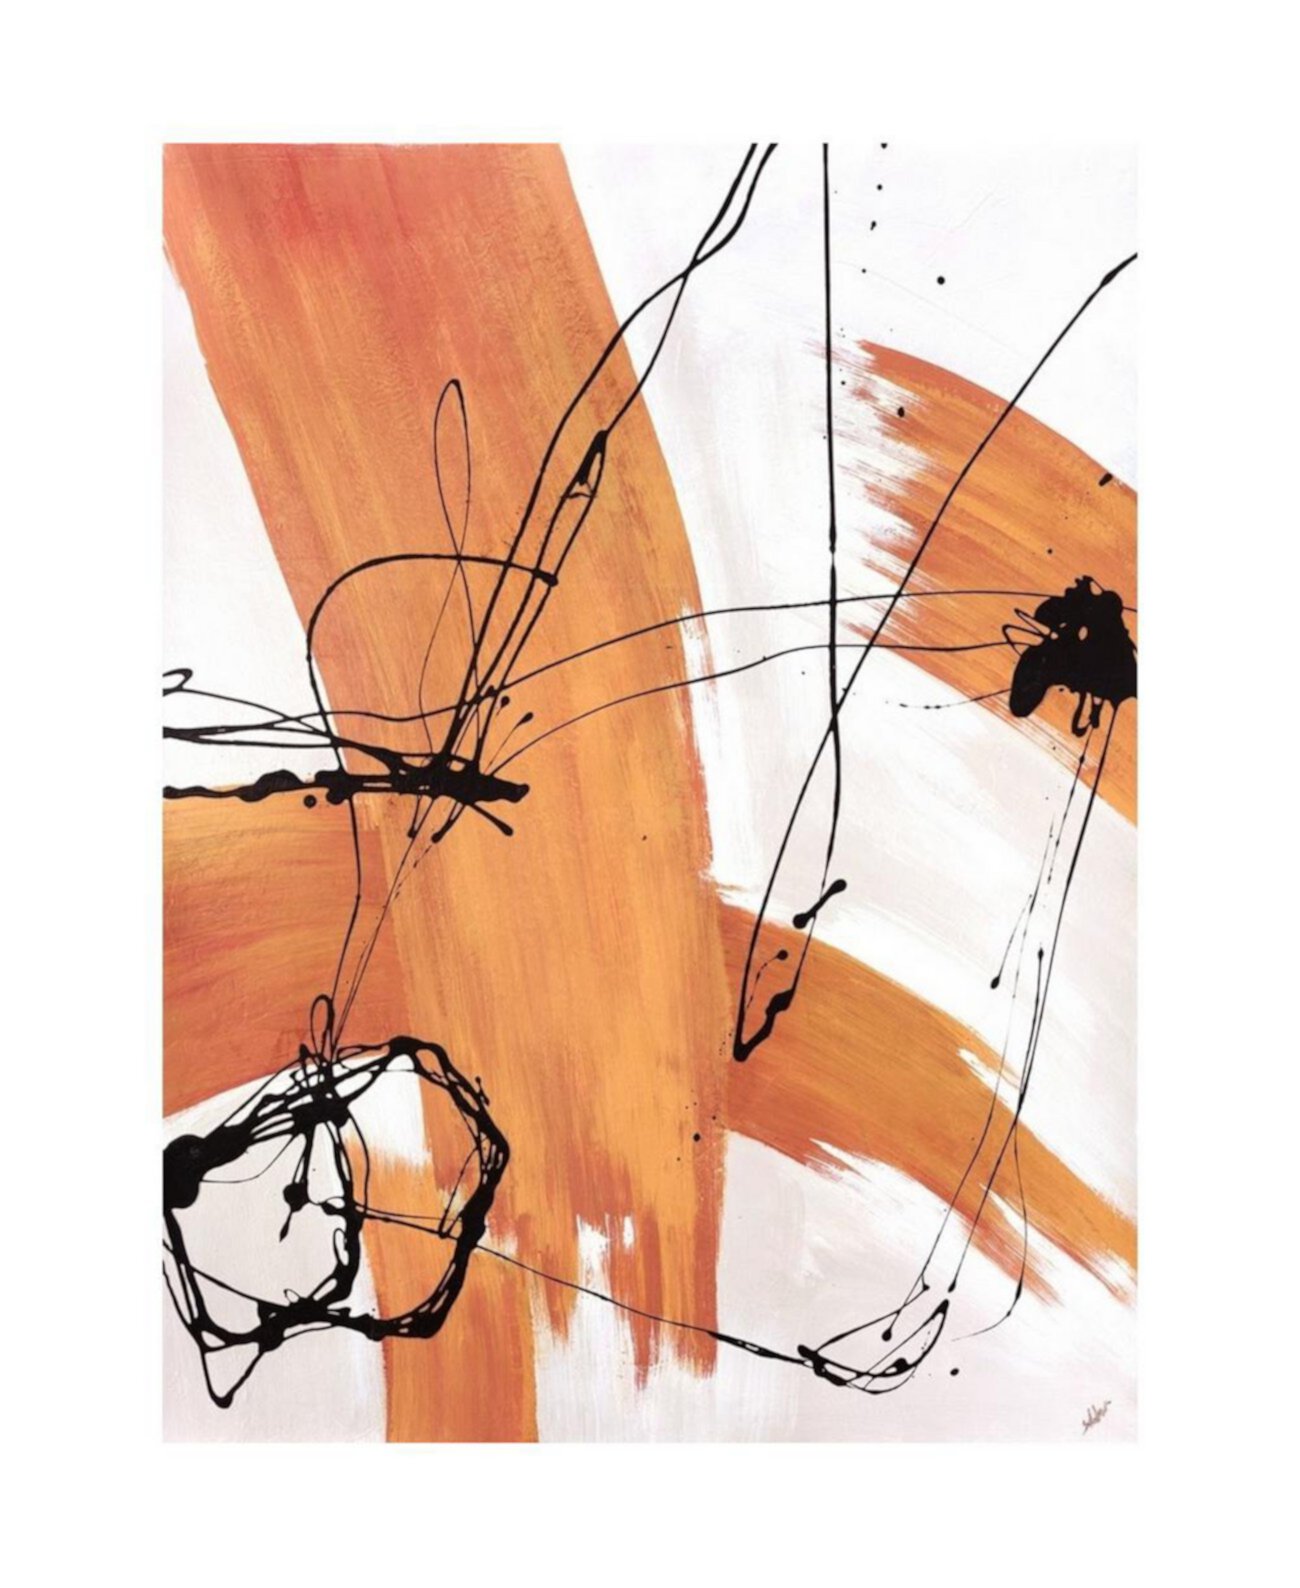 Картина на холсте "Адаптация" Джошуа Шикера - 18 дюймов x 24 дюйма. GreatBigCanvas